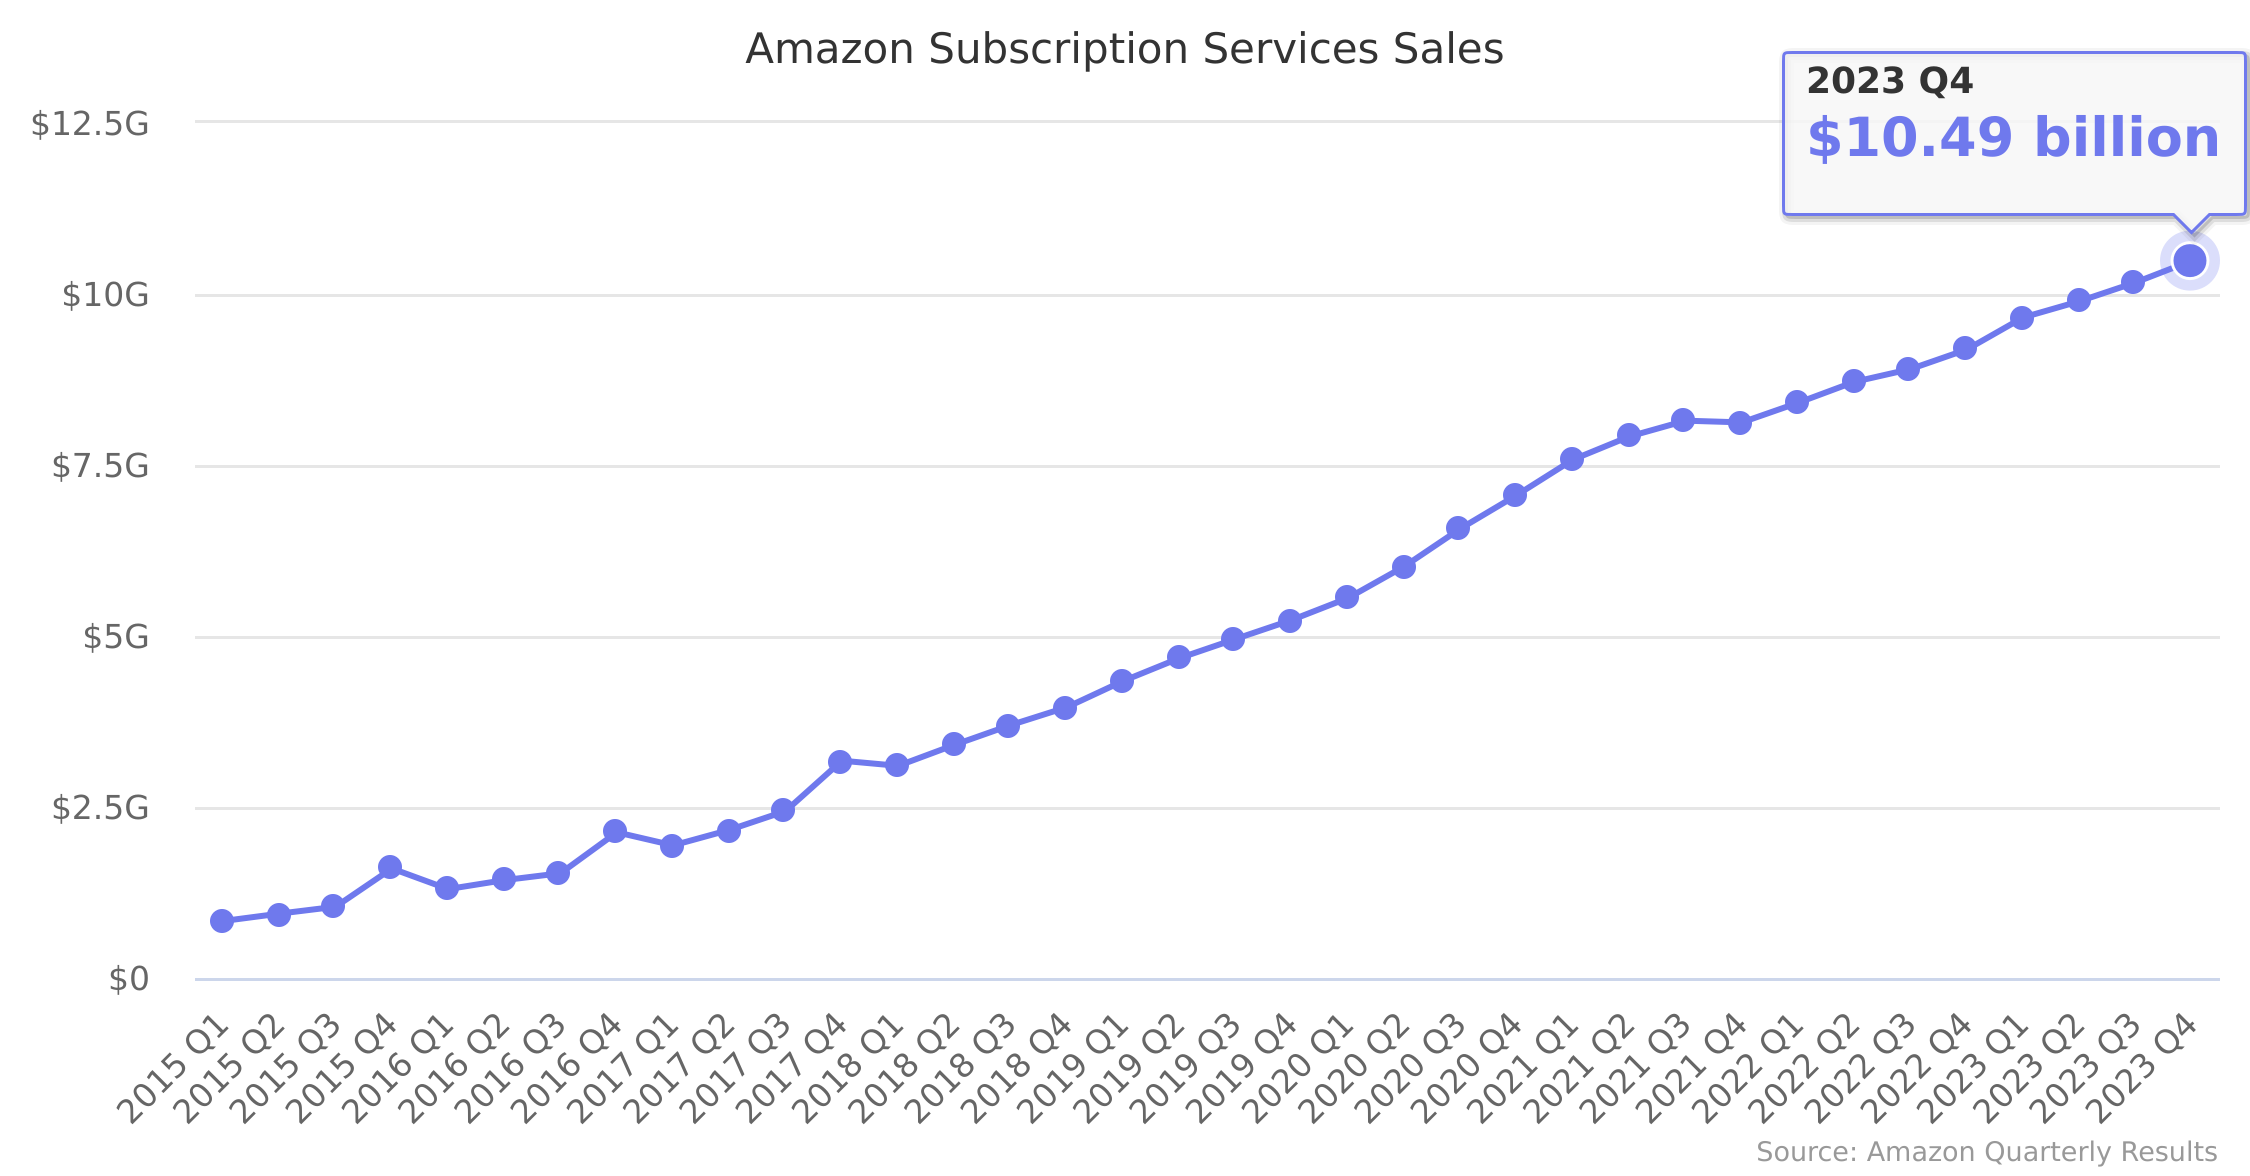 Amazon Subscription Services Sales